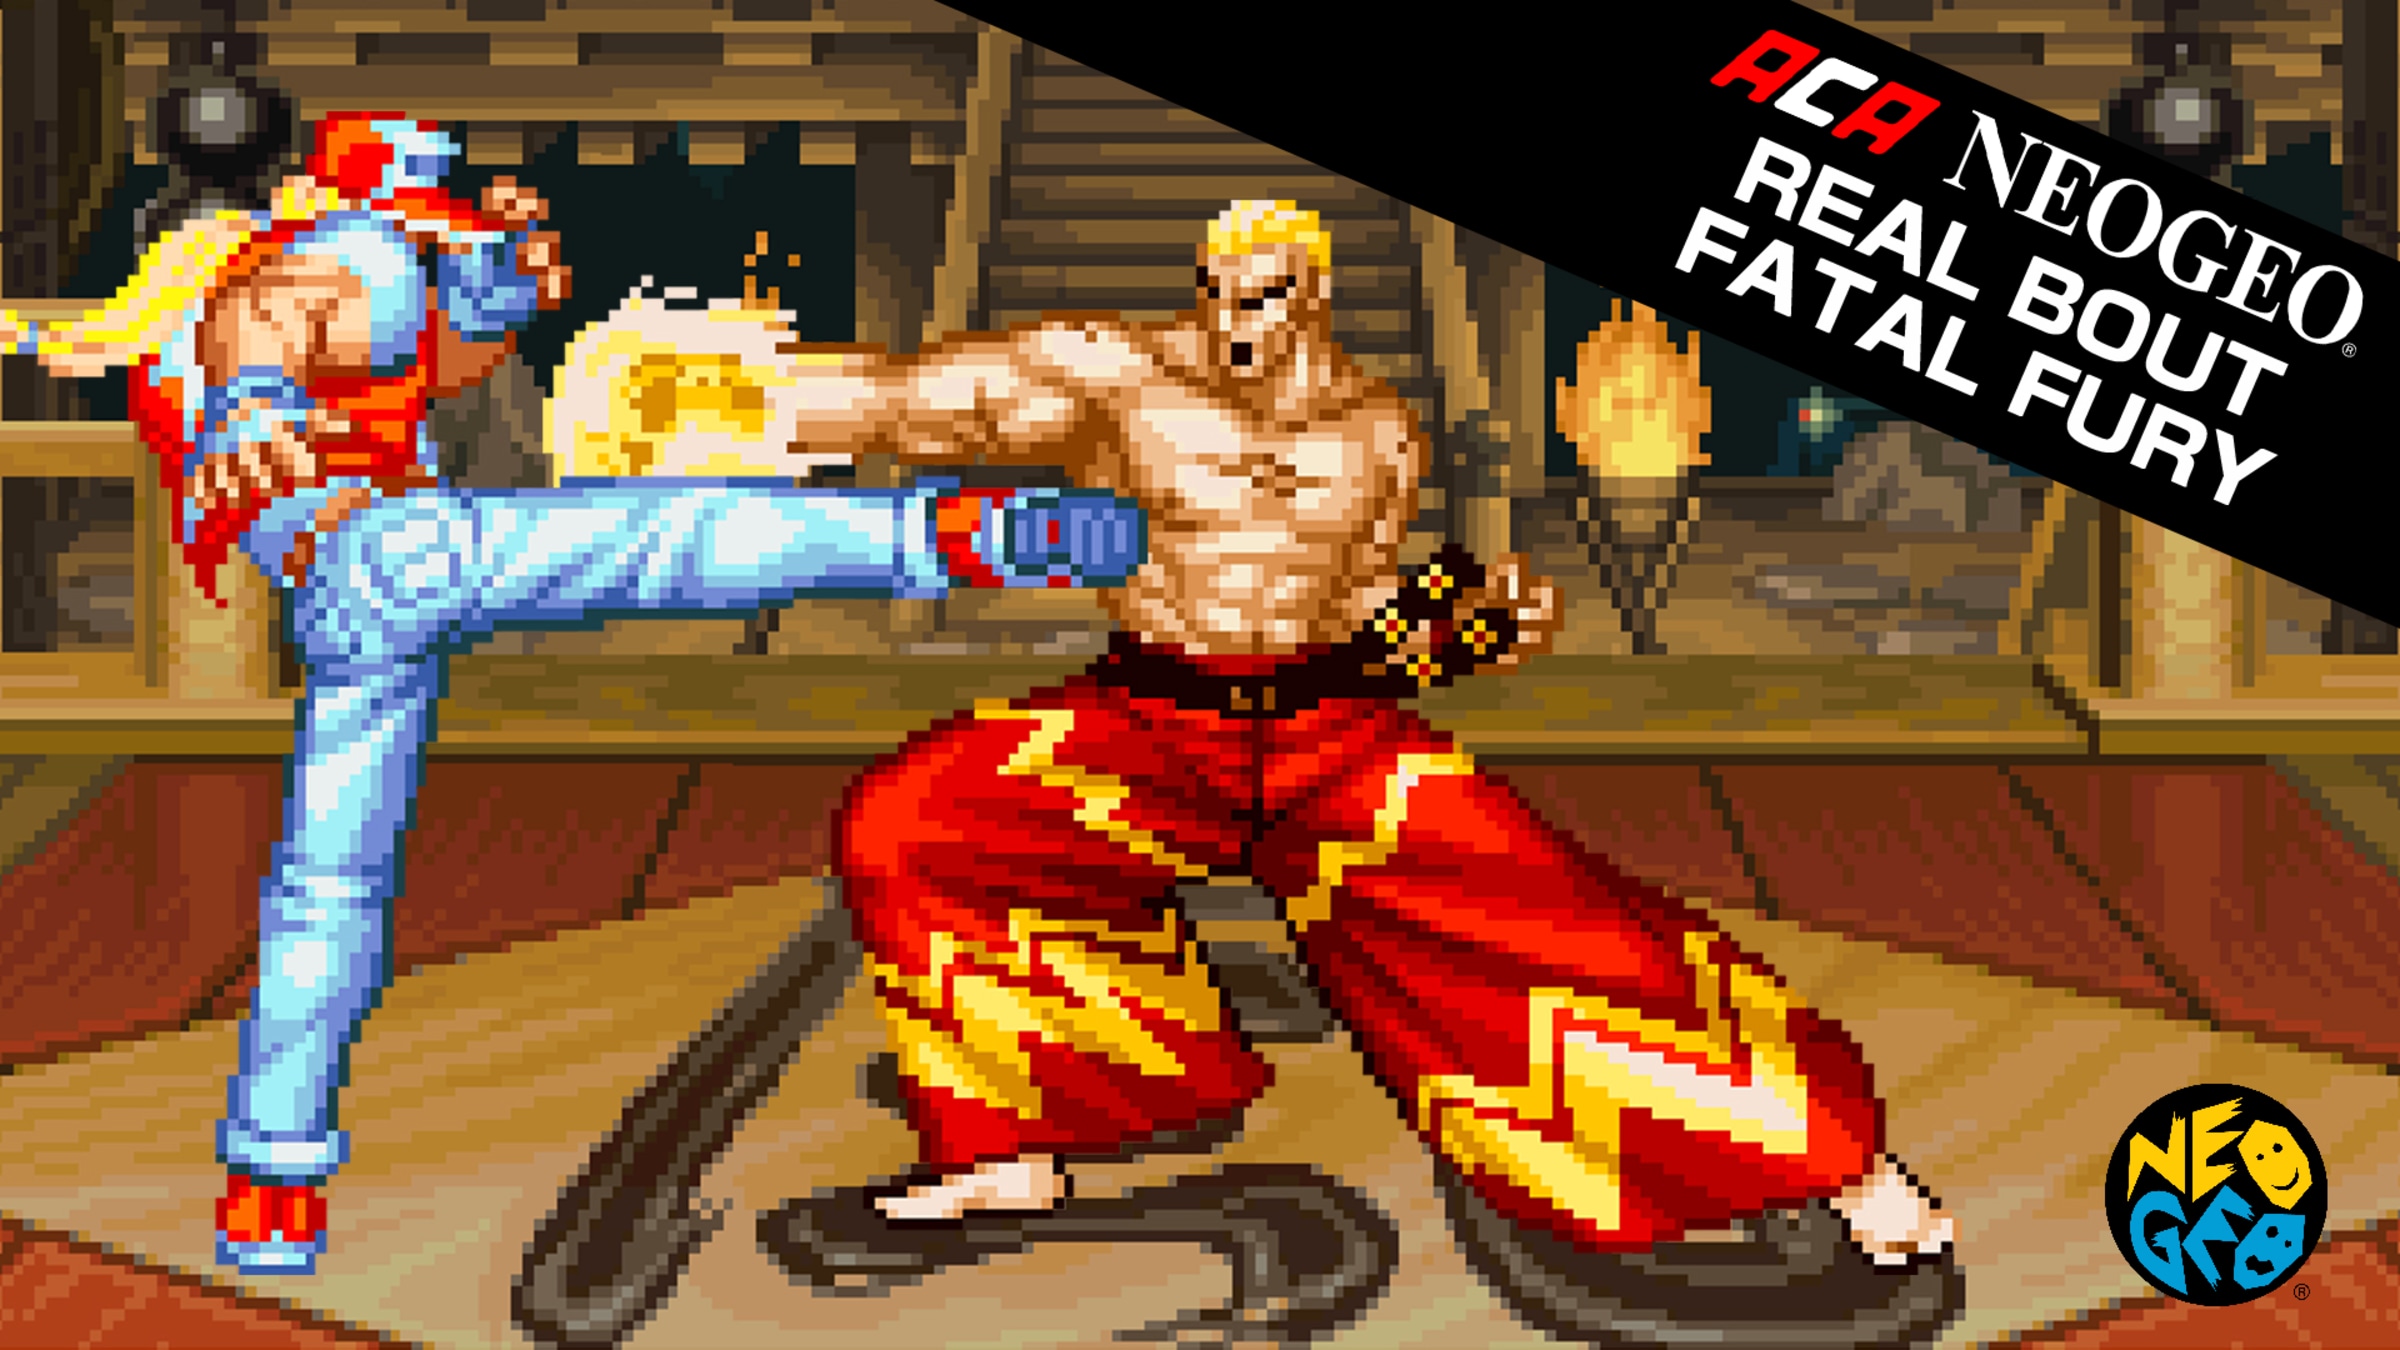 Ending for Fatal Fury 3-If You Reach Yamazaki (Neo Geo)